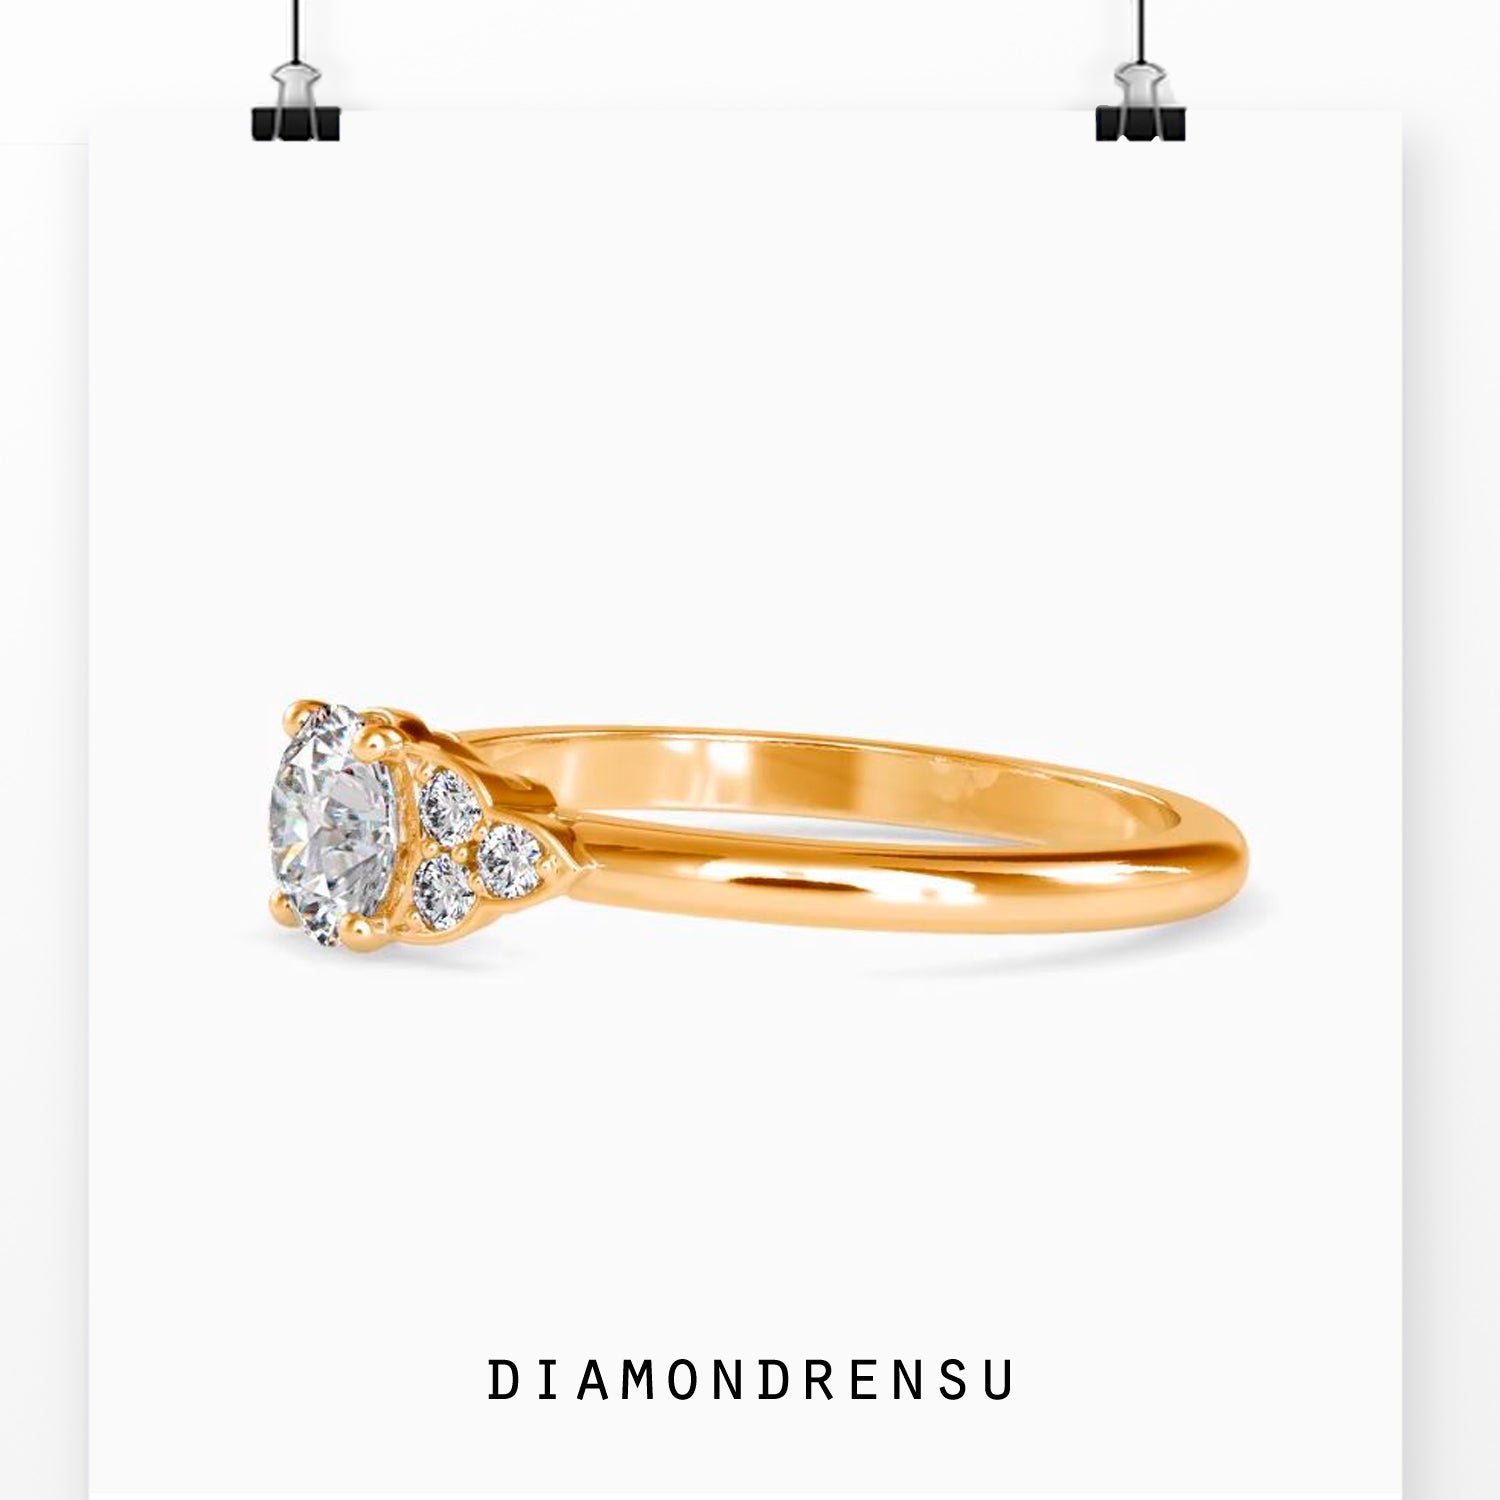  vintage engagement rings - diamondrensu